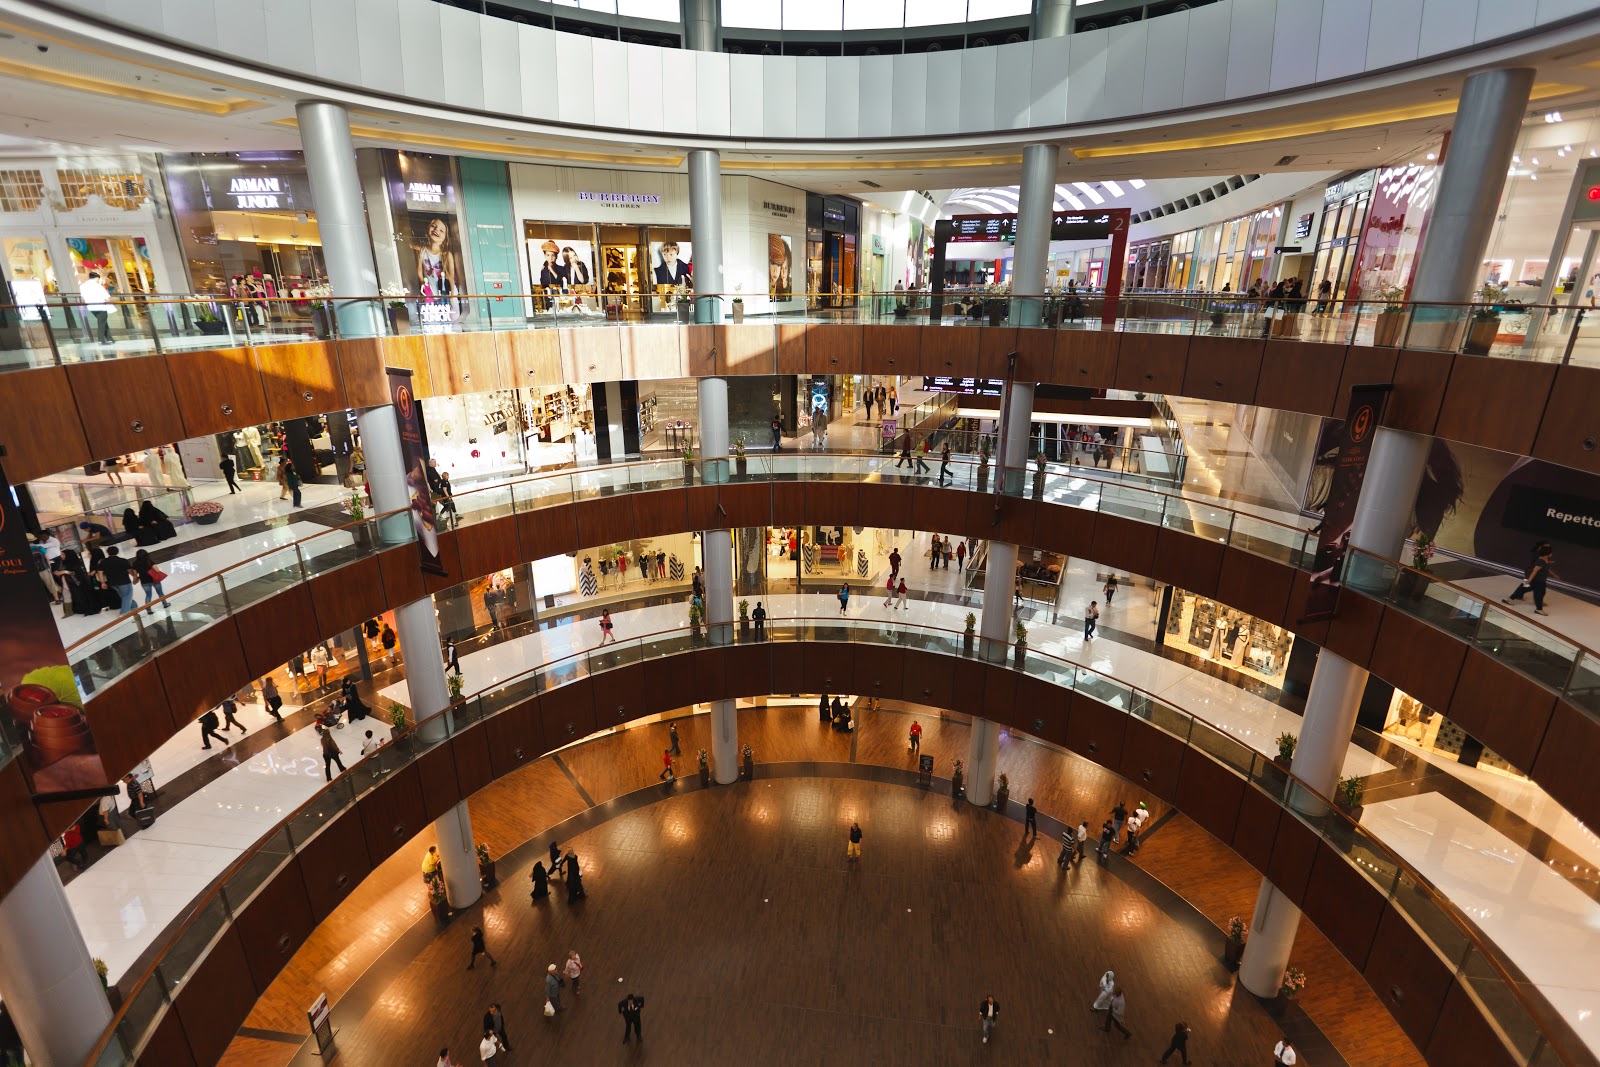 Etisalat brings Ericsson Radio Dot system to Dubai Outlet Mall